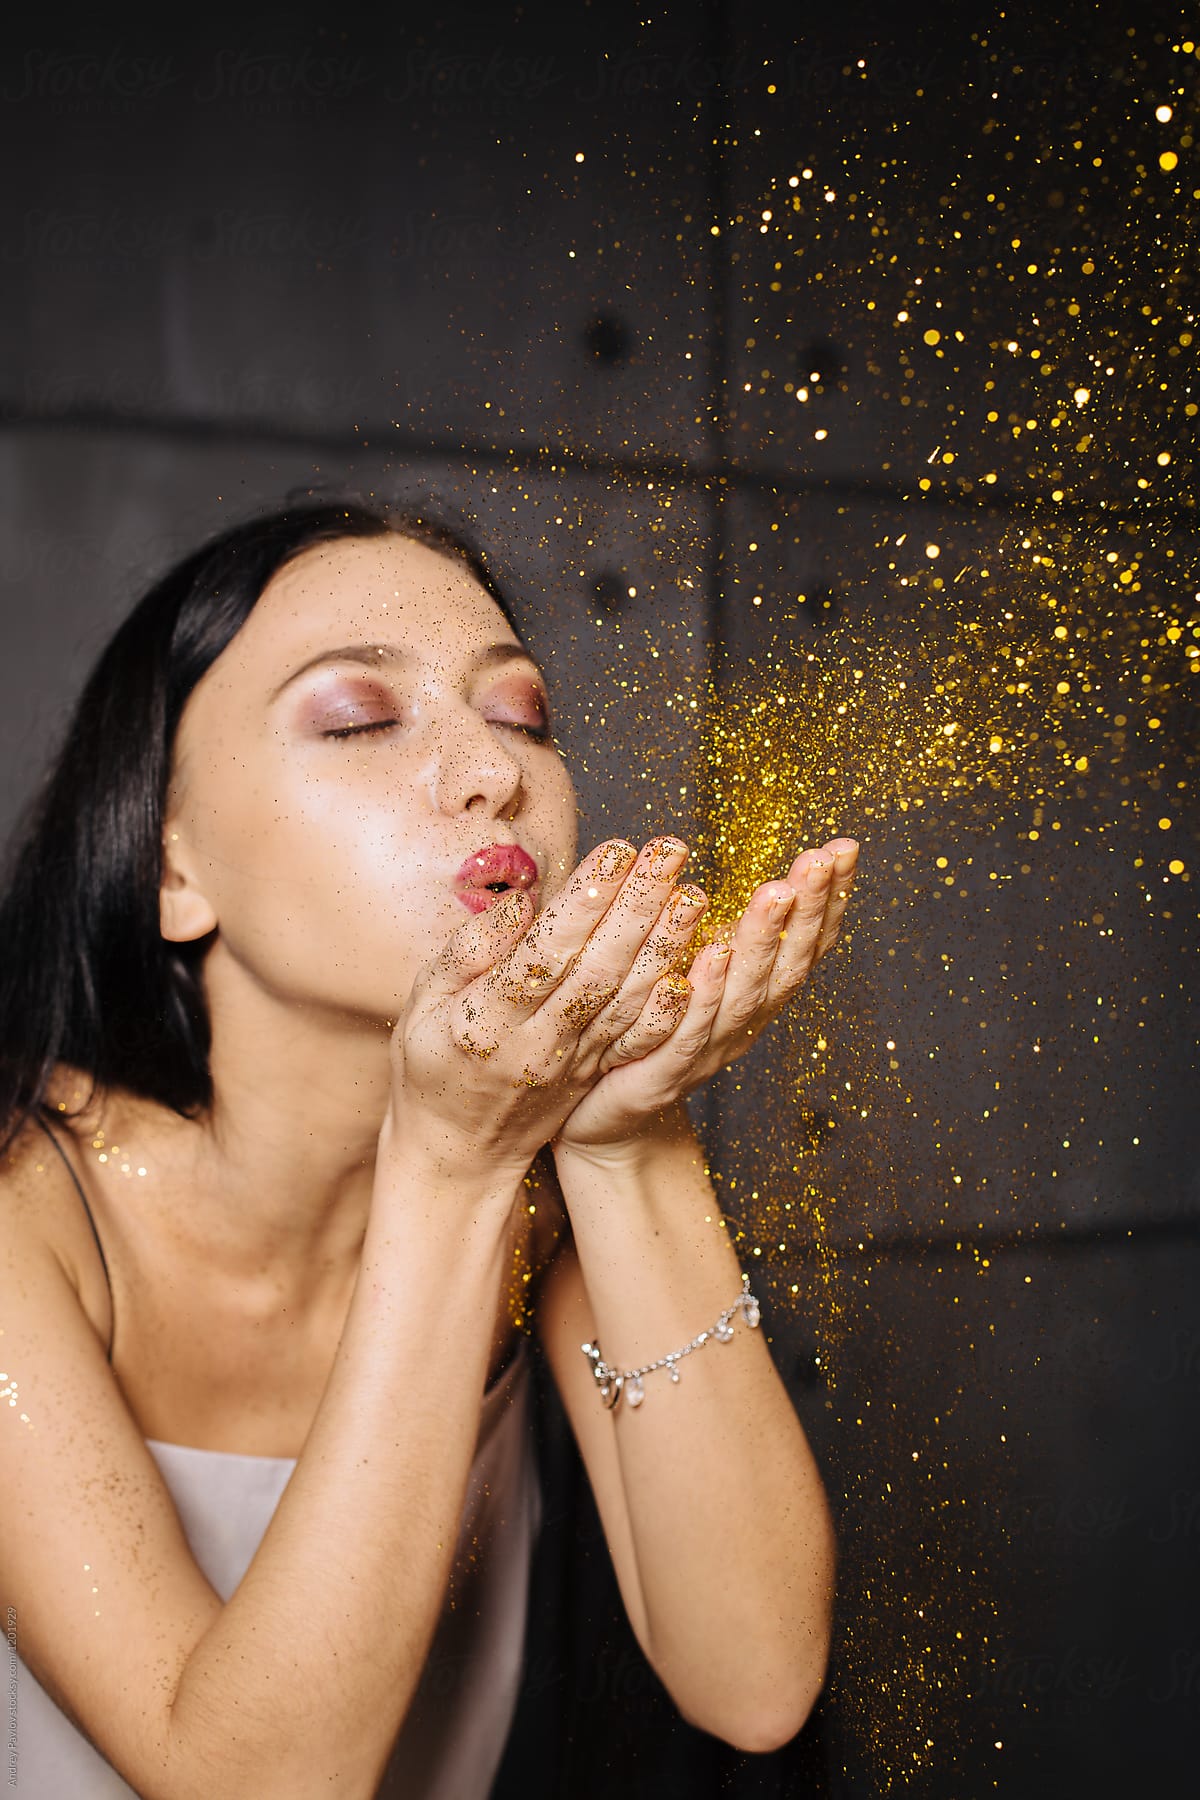 Girl Blowing Glitters Out Of Hands Del Colaborador De Stocksy Andrey 